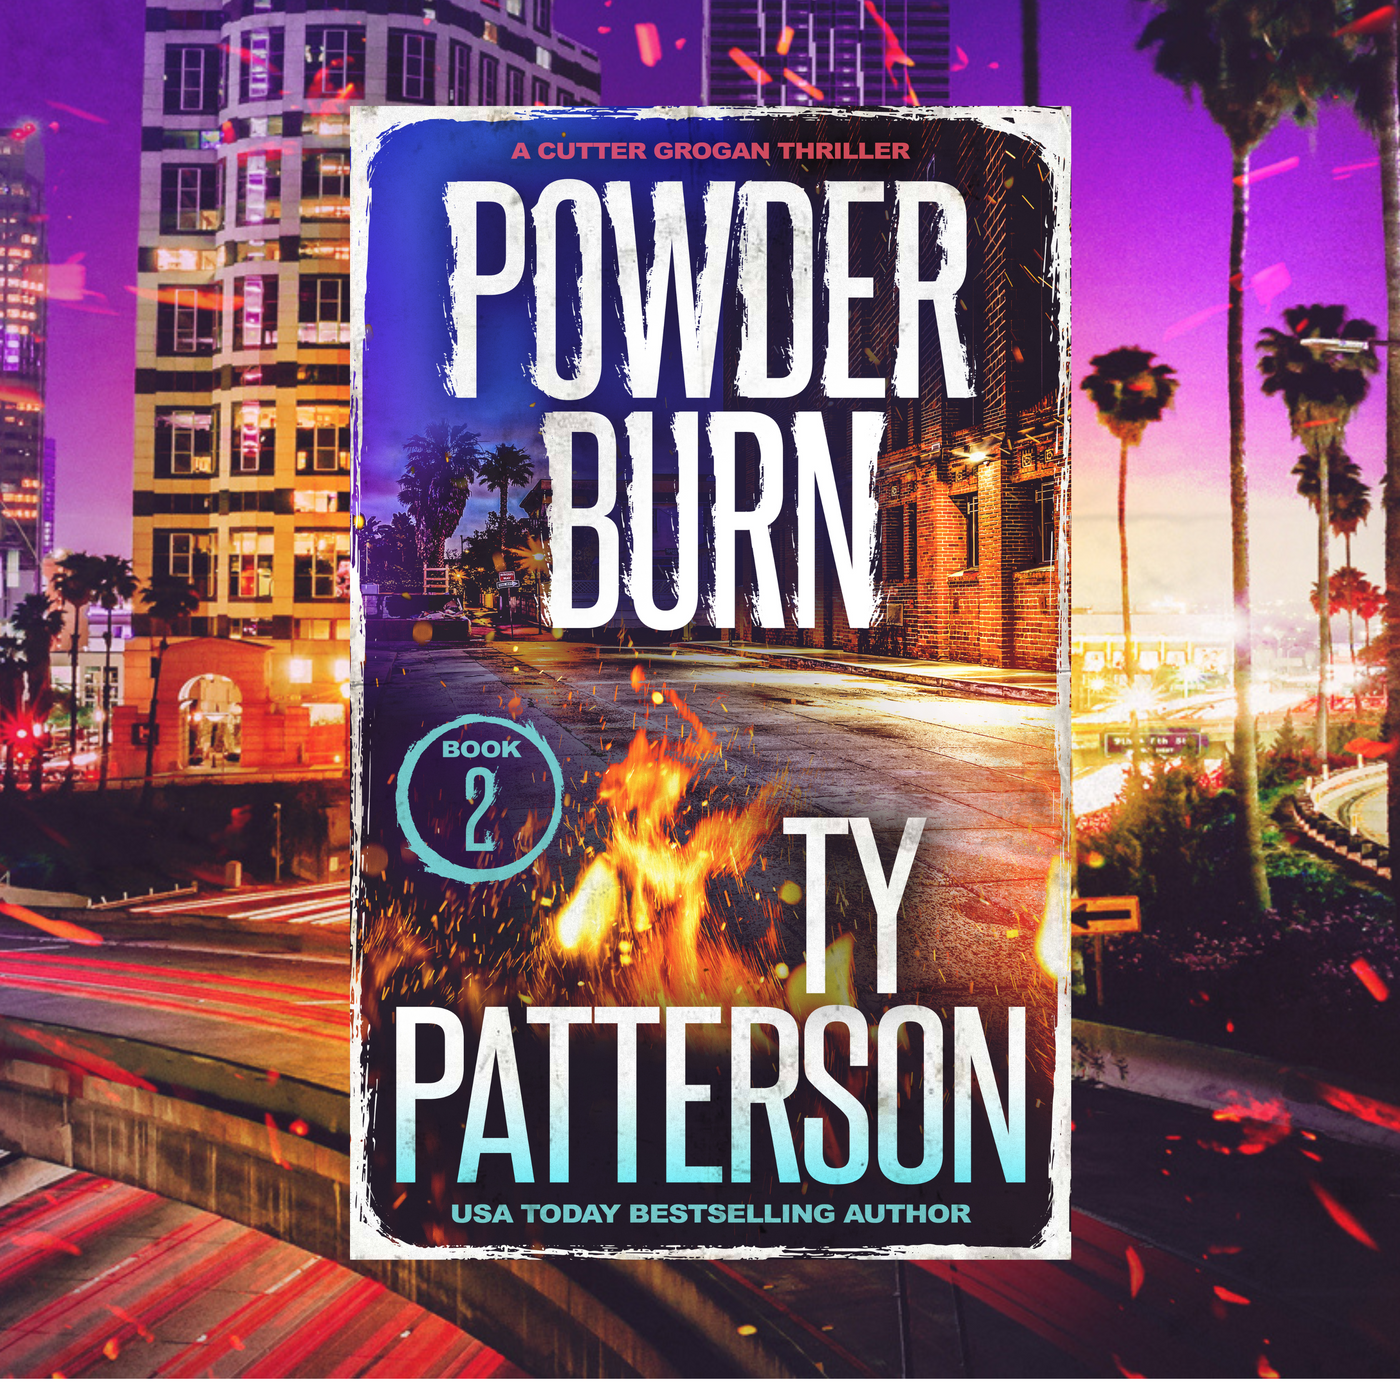 Powder Burn Audiobook # 3 in the Cutter Grogan Thrillers. AI narrated